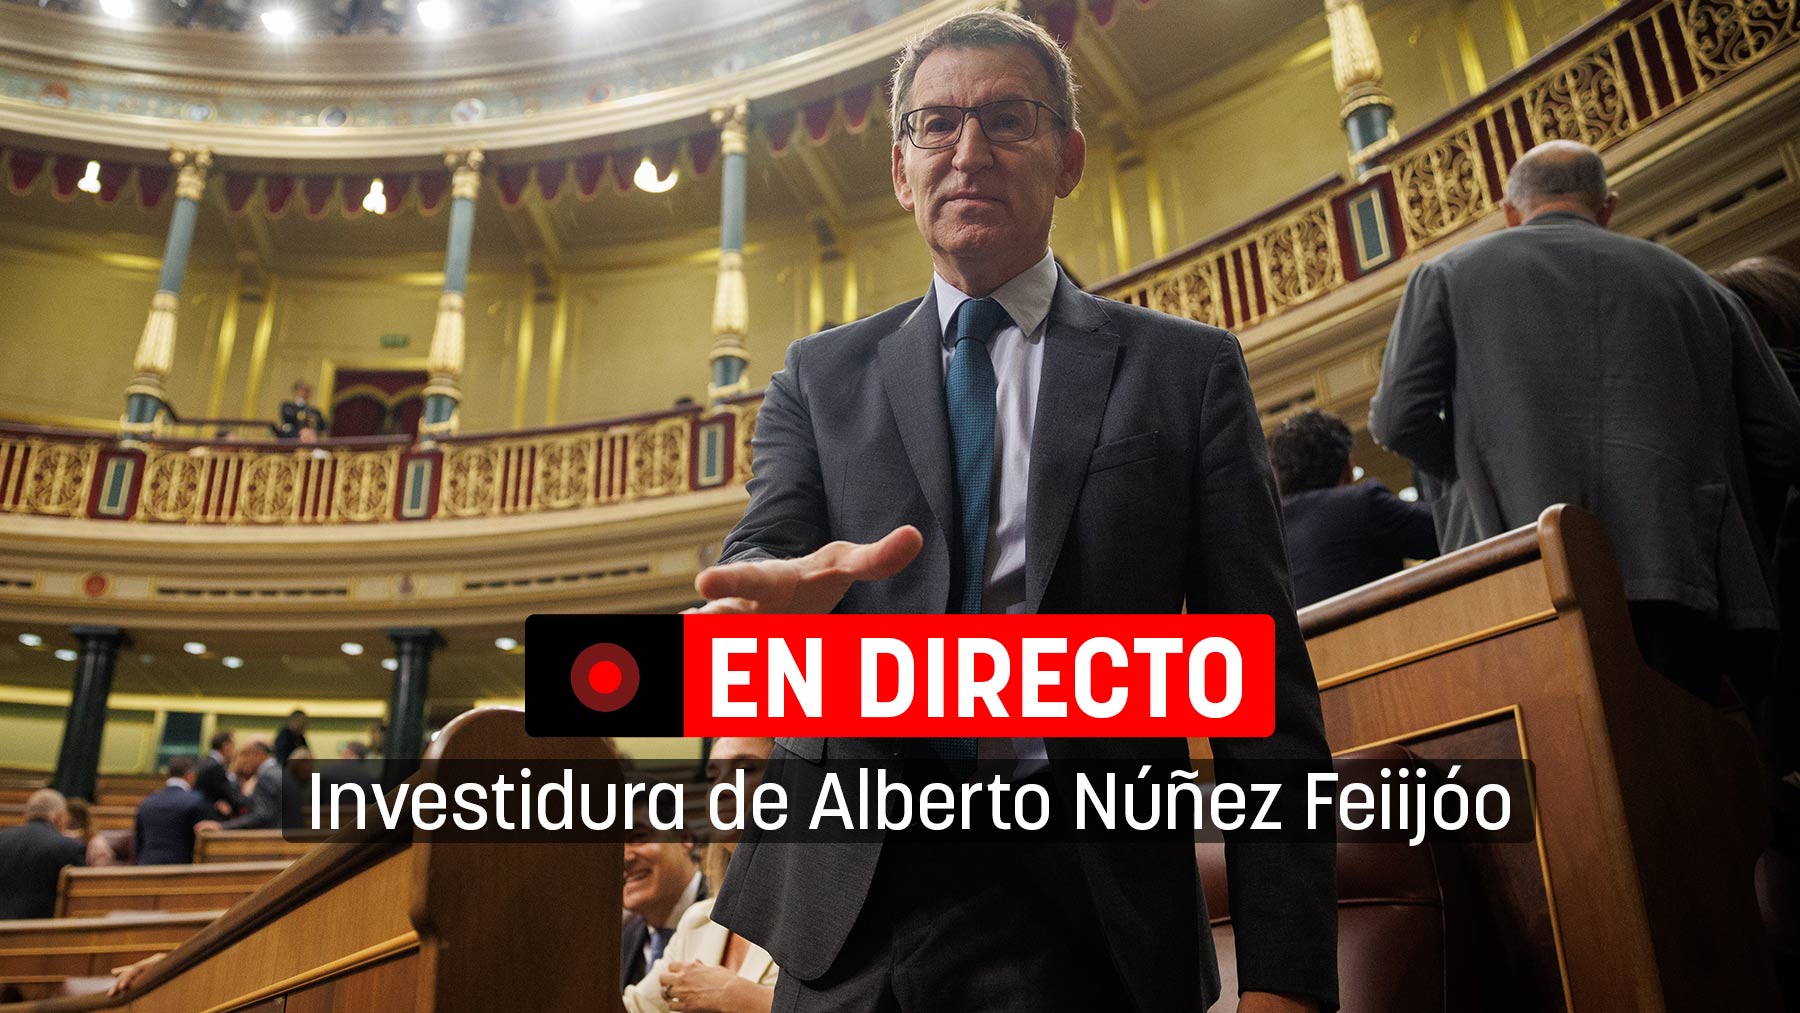 Investidura de Alberto Núñez-Feijóo en directo